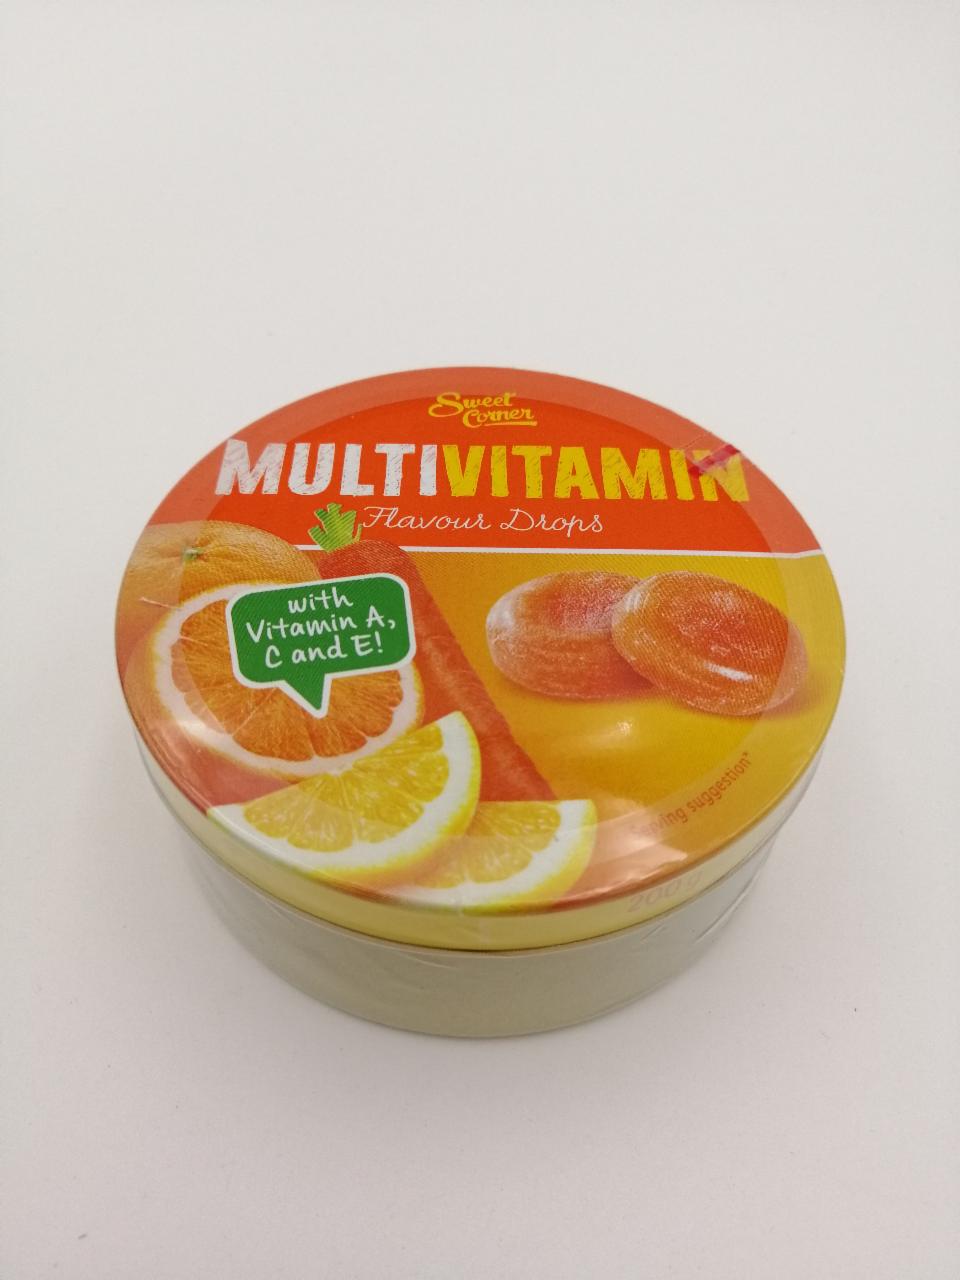 Fotografie - Mac Iver Multi vitamin sweets